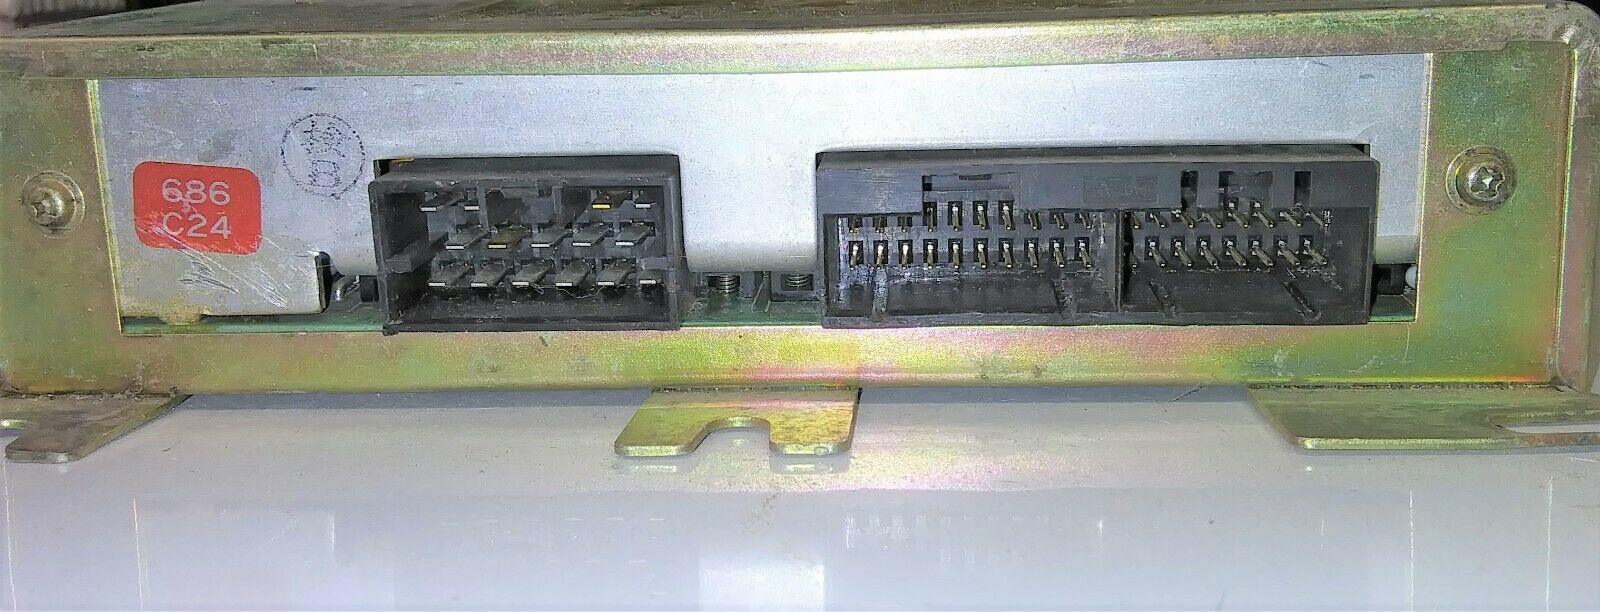 1987 Nissan Stanza ecm ecu computer A11-686 C24.